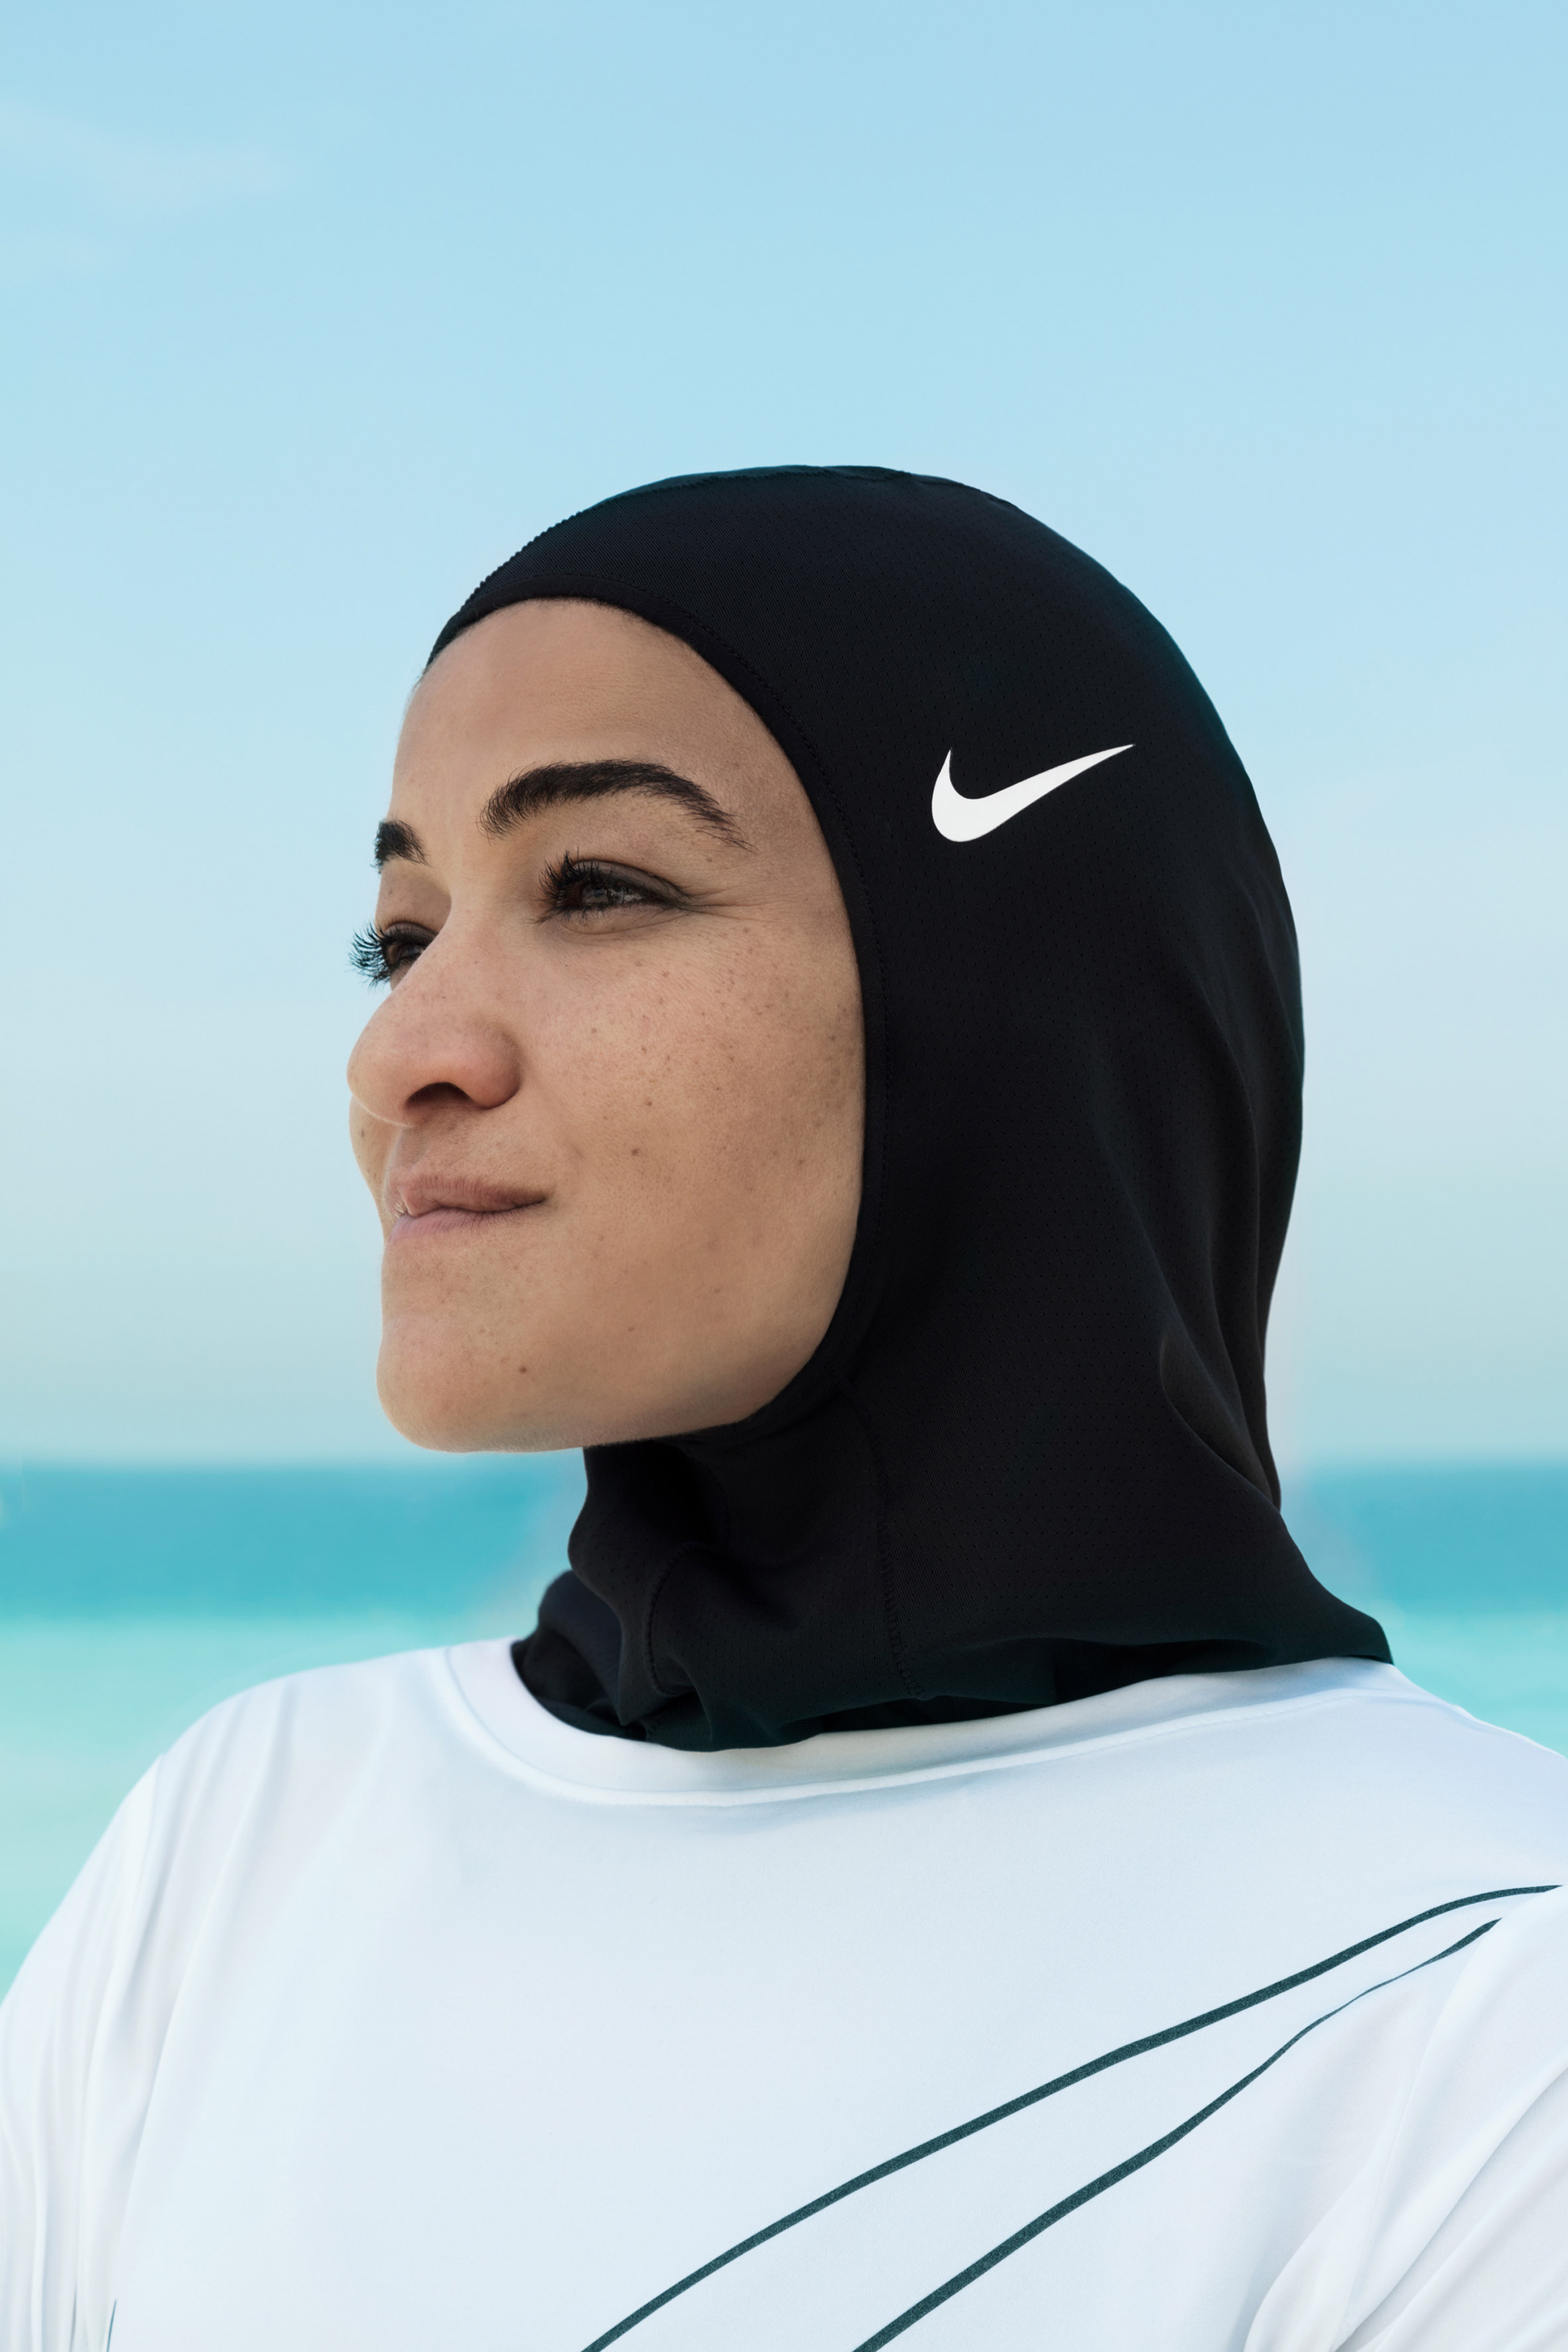 Nike unveils Pro Hijab for female Muslim